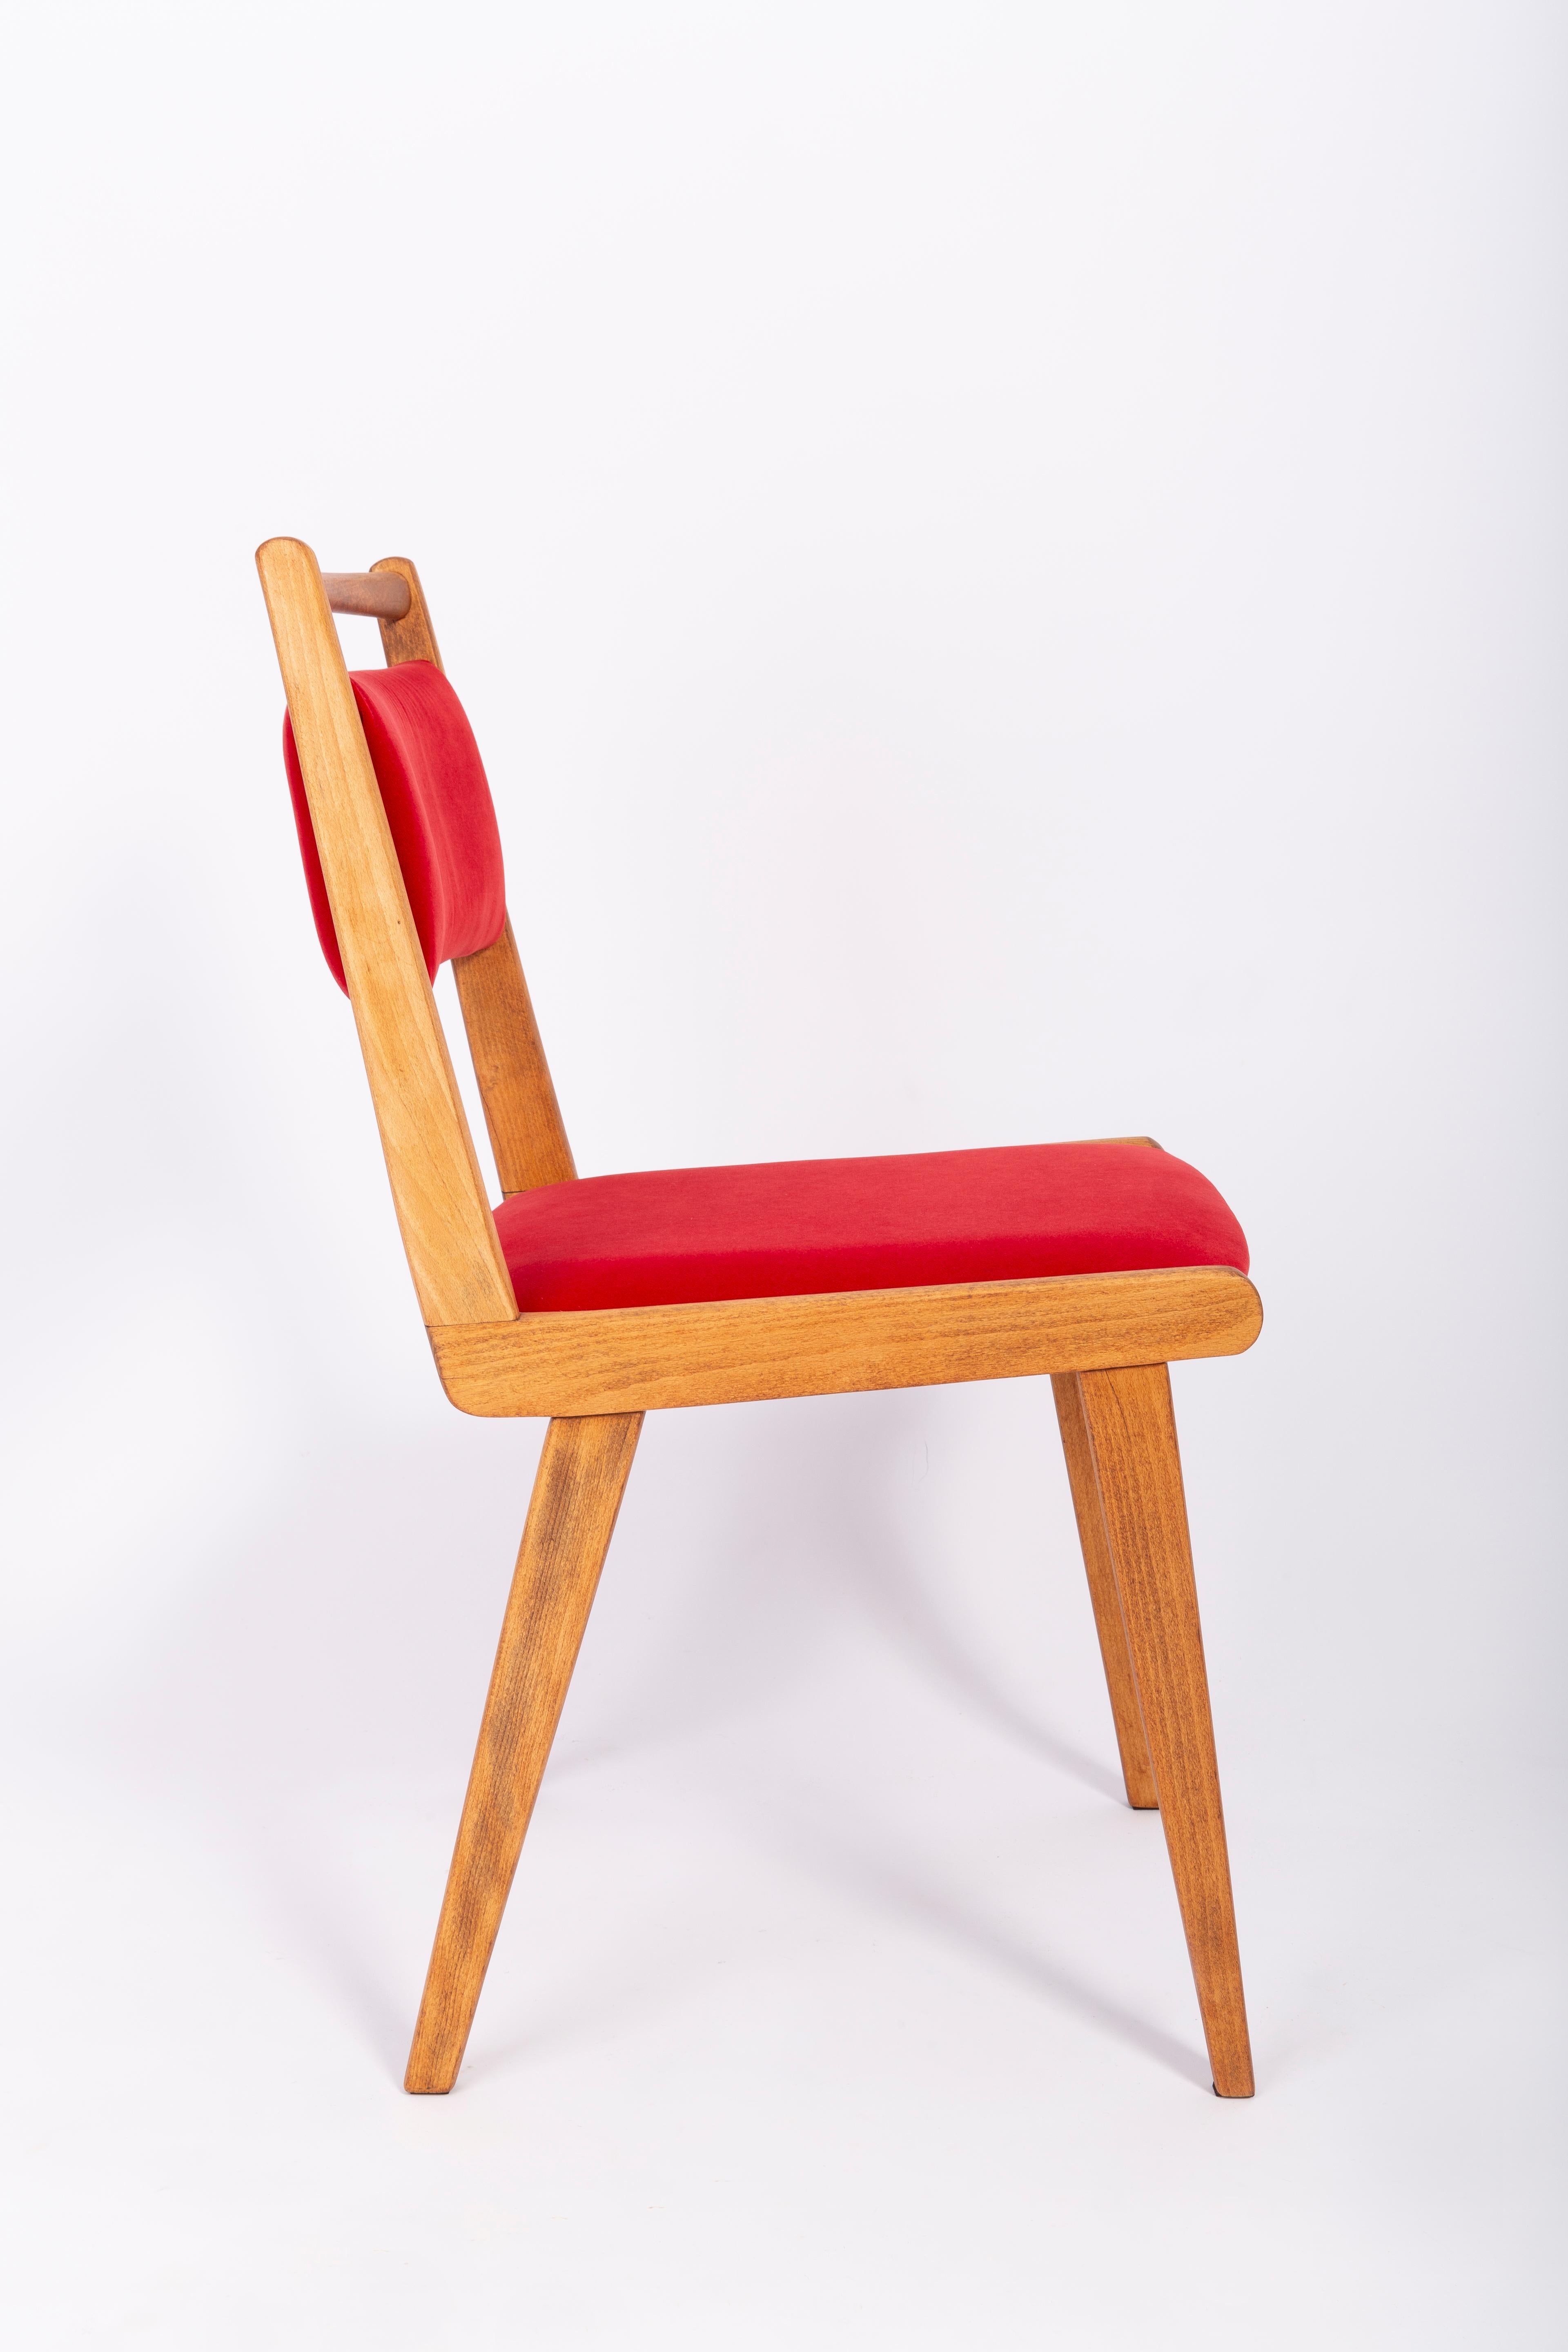 Polish Set of Eight 20th Century Red Velvet Chairs, by Rajmund Halas, Poland, 1960s For Sale